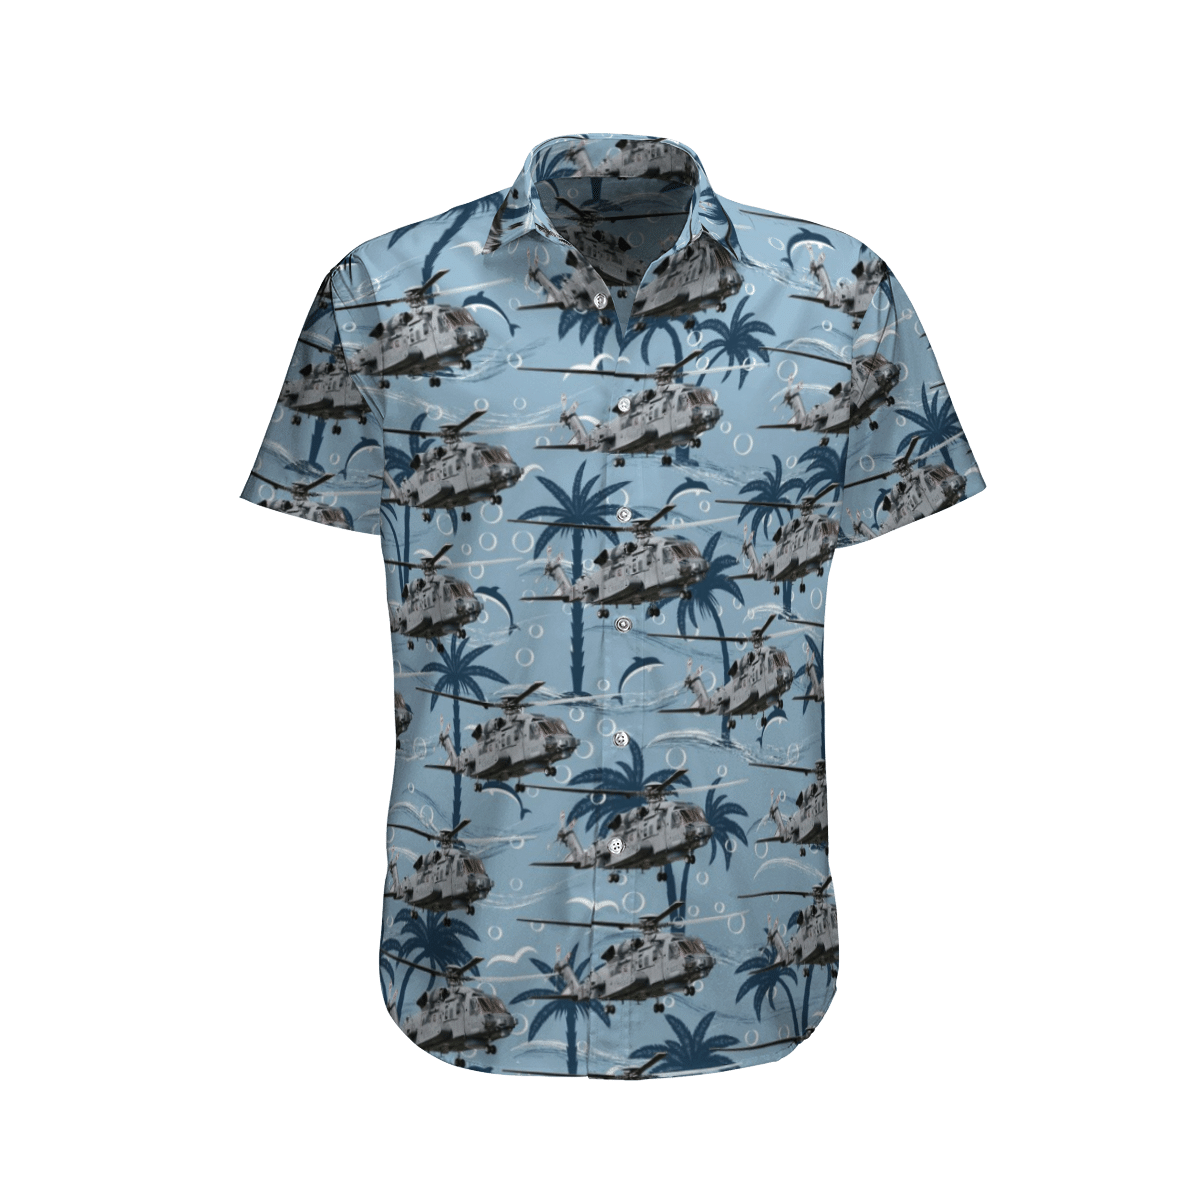 Get a new Hawaiian shirt to enjoy summer vacation 155